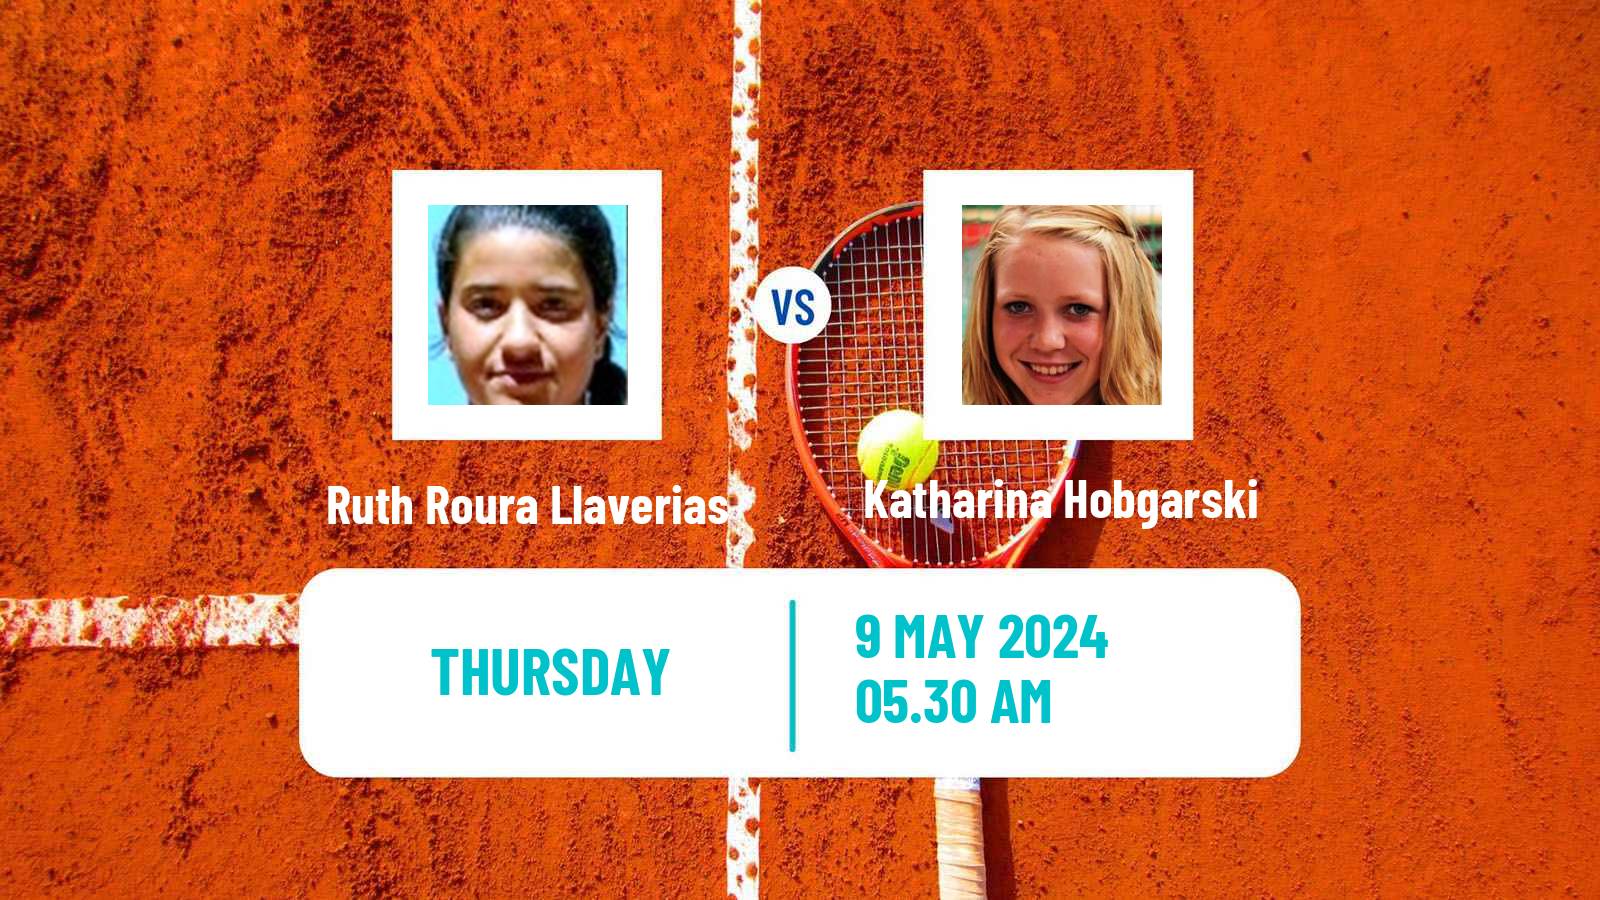 Tennis ITF W35 Platja D Aro Women Ruth Roura Llaverias - Katharina Hobgarski